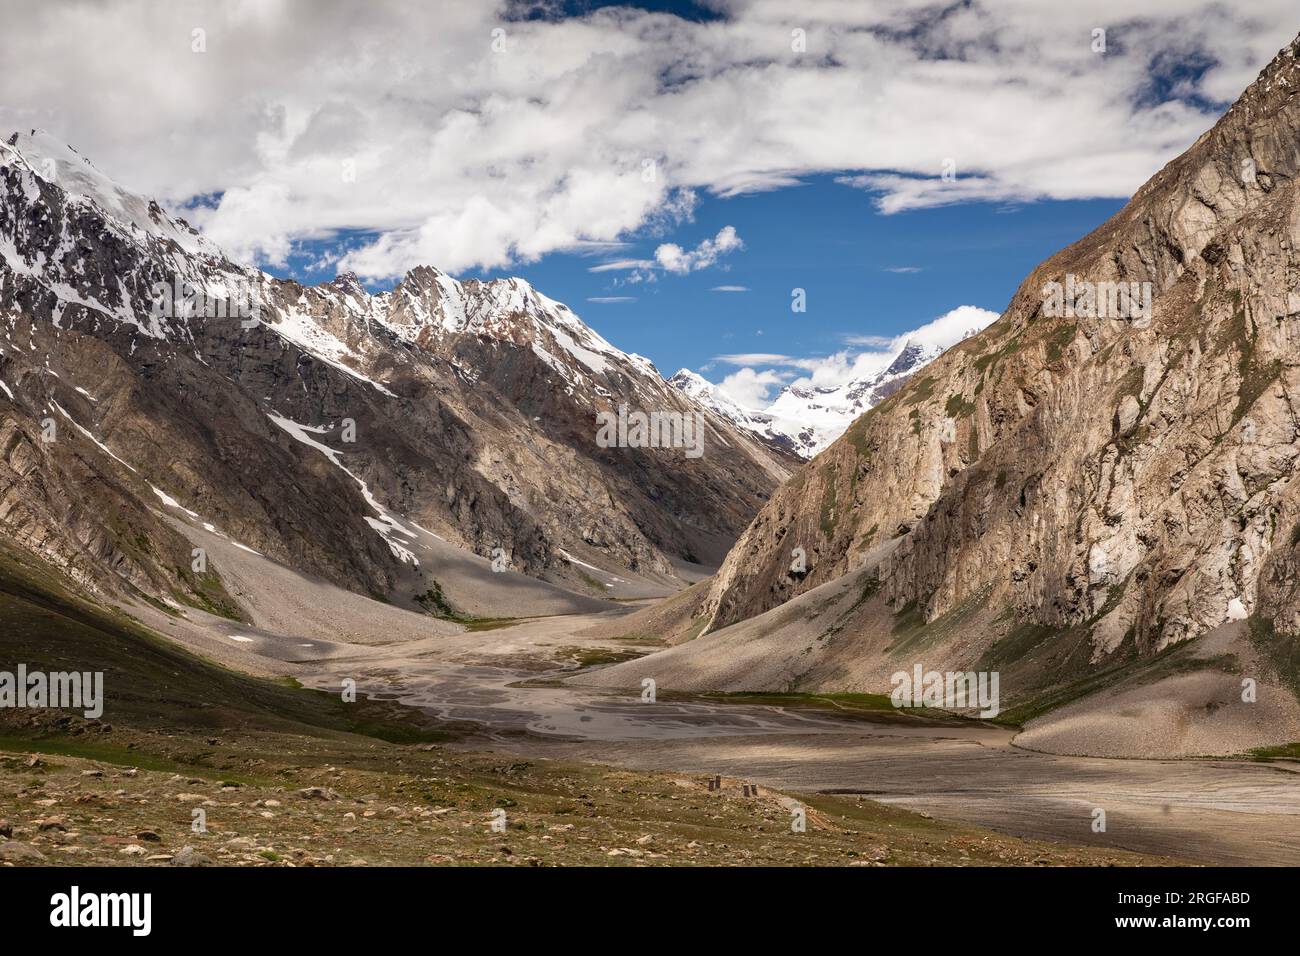 Indien, Ladakh, Zanskar, Pensi La, schneebedeckte Gipfel vom 14.436' Penzila Pass Stockfoto